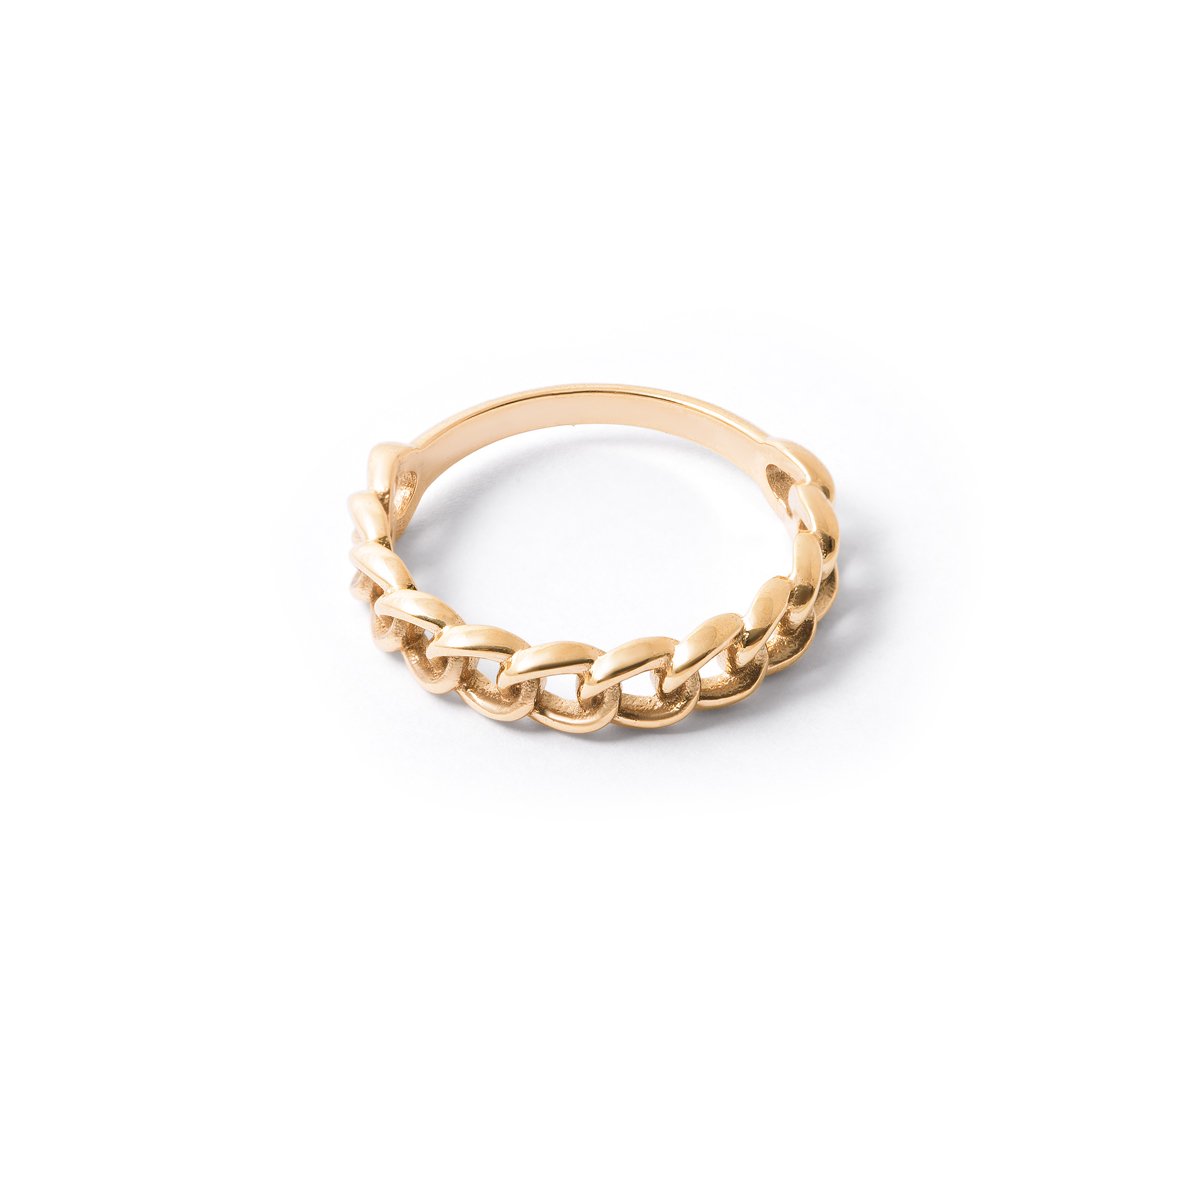 Cartier gold ring g